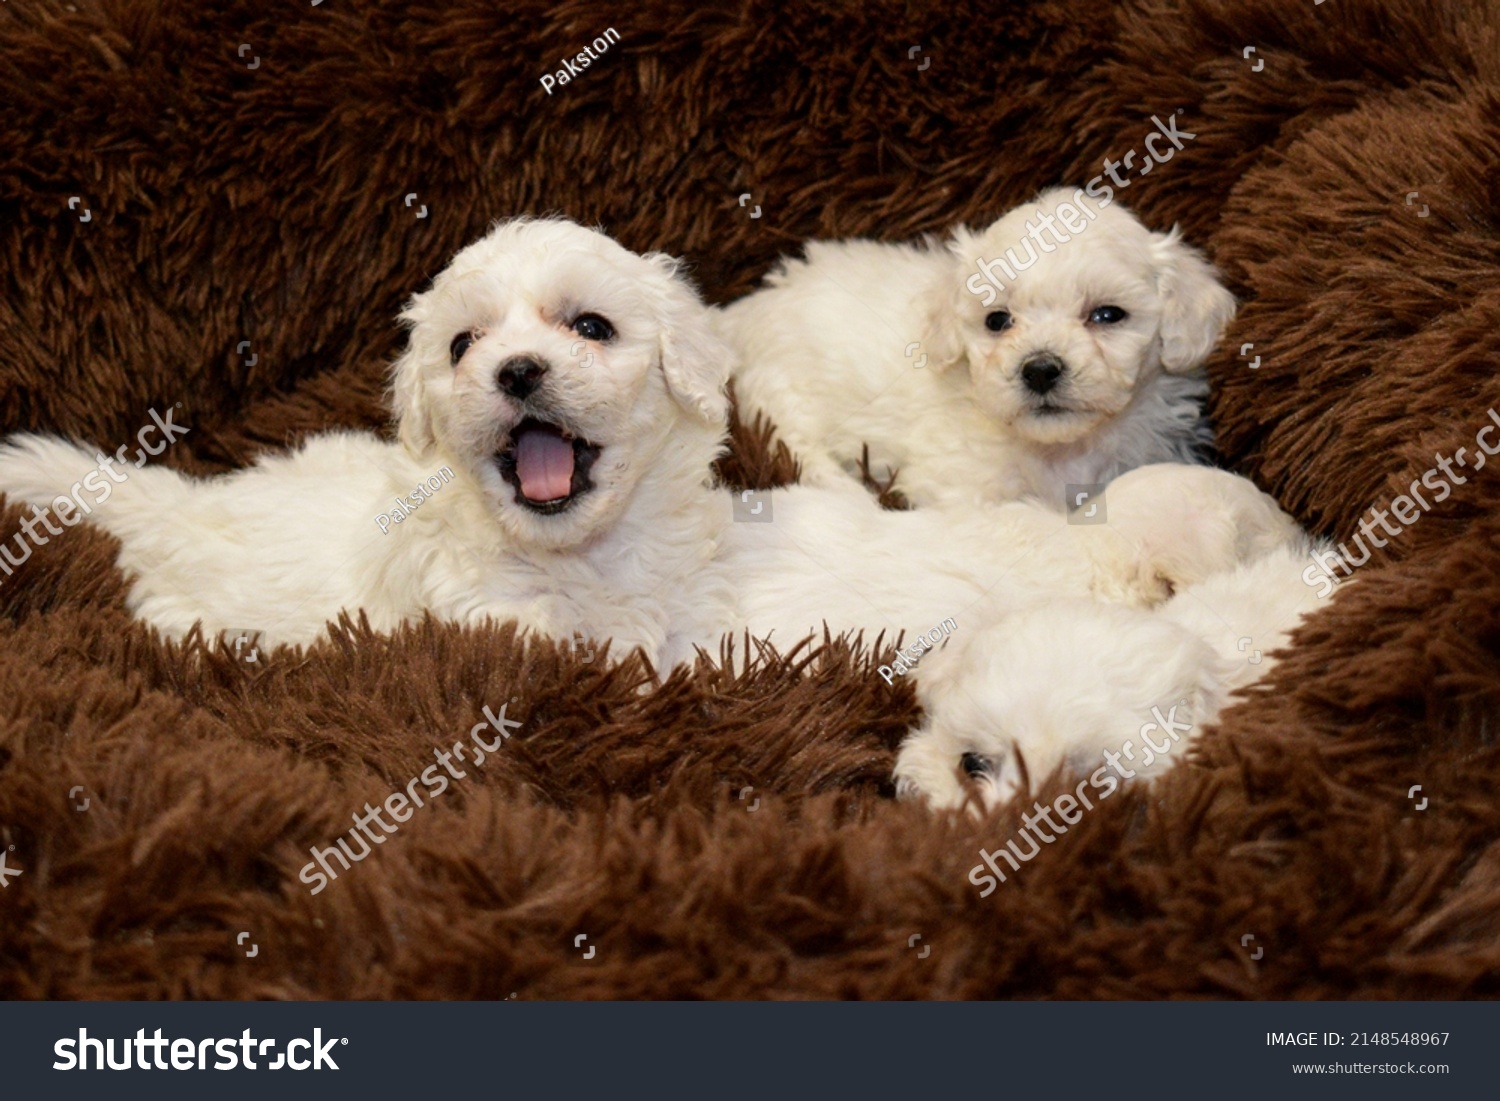 white bichon frise puppy on a soft braun fur blanket looking at the camera, cute little lap dog, sweet pet, photograph, bichon breeder #2148548967